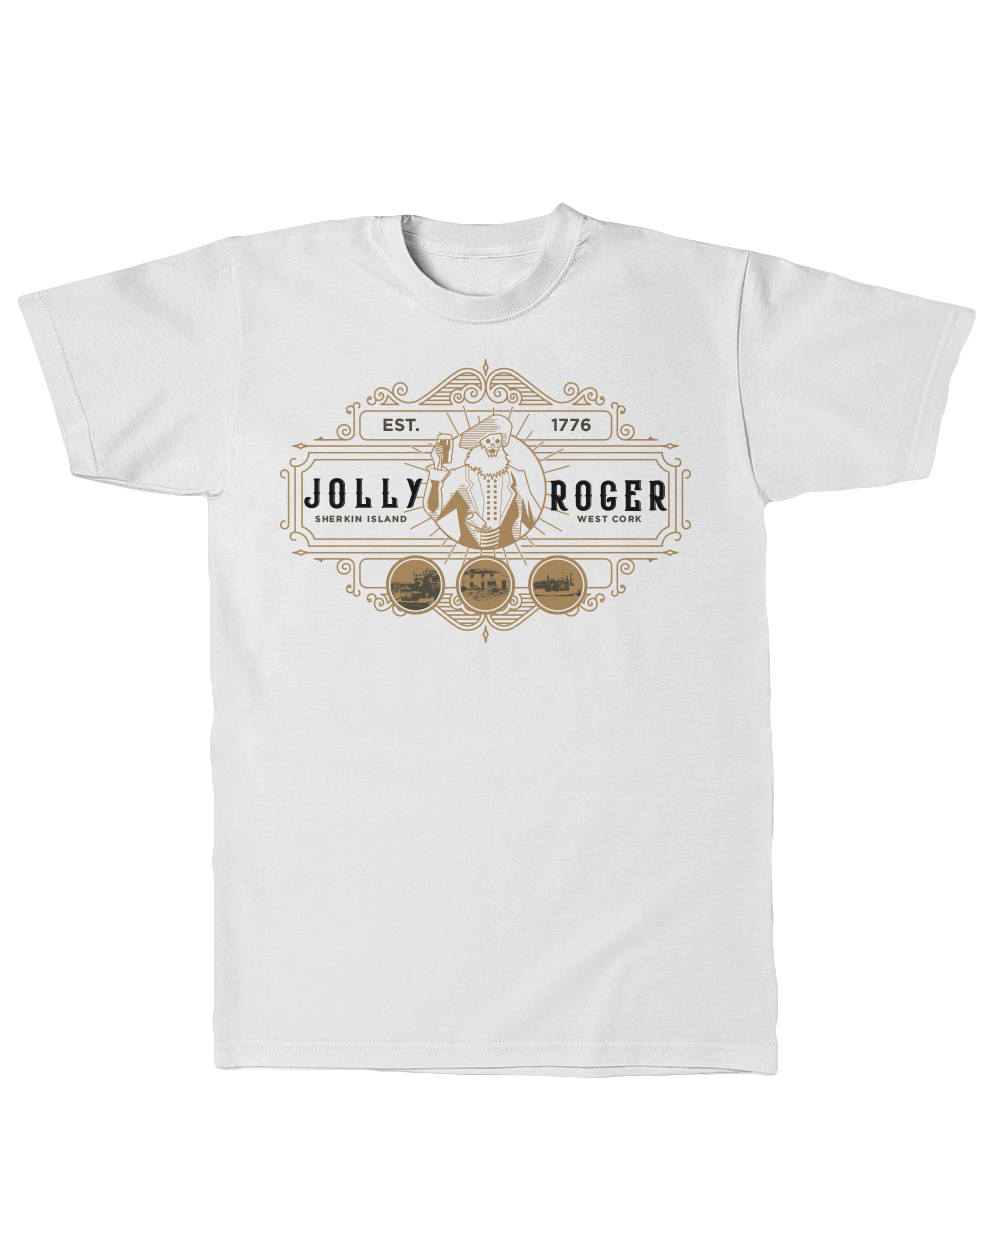 jolly-roger-shirt-white.png